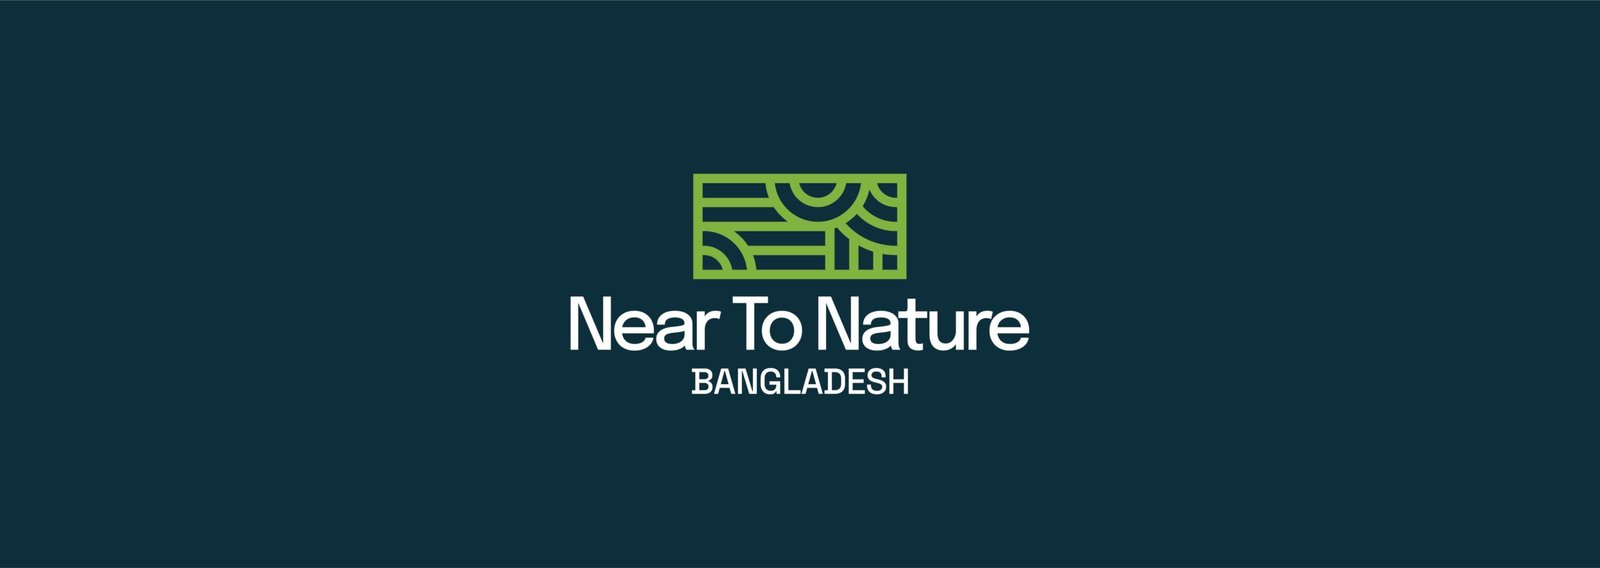 Nature to near logo mockup in carpet